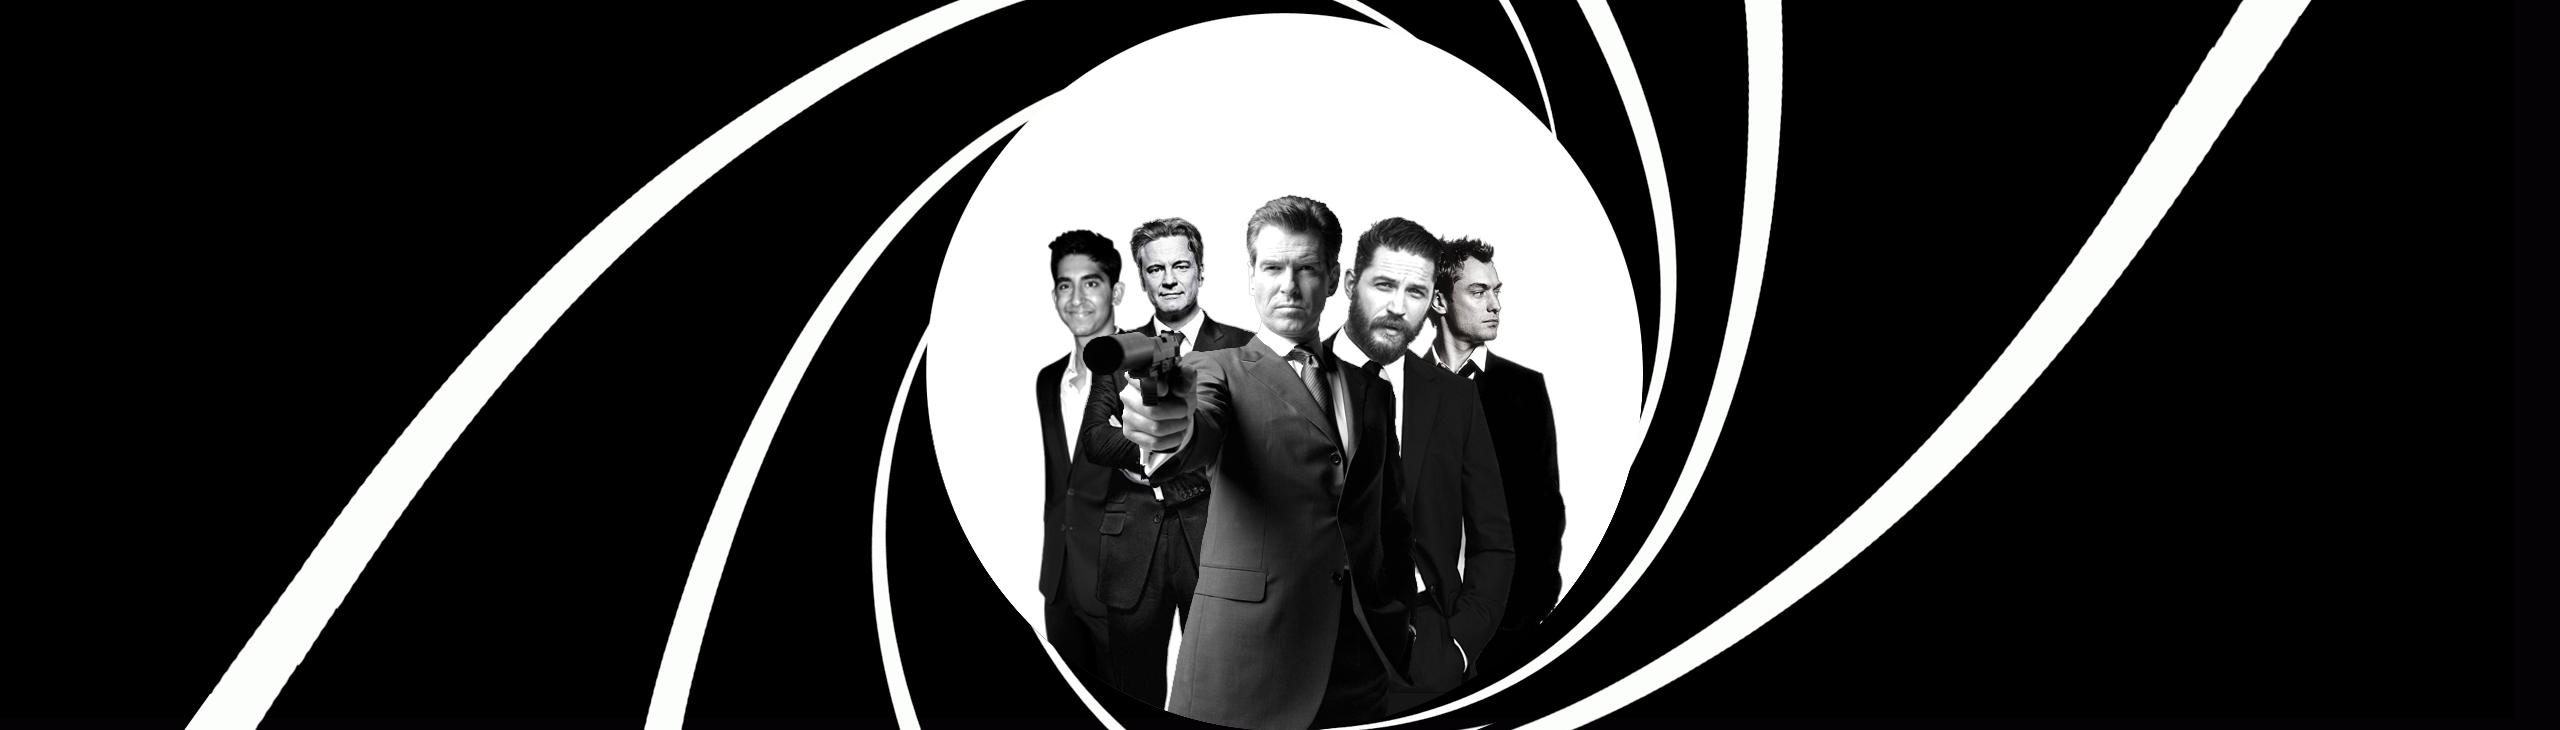 Casting 007 